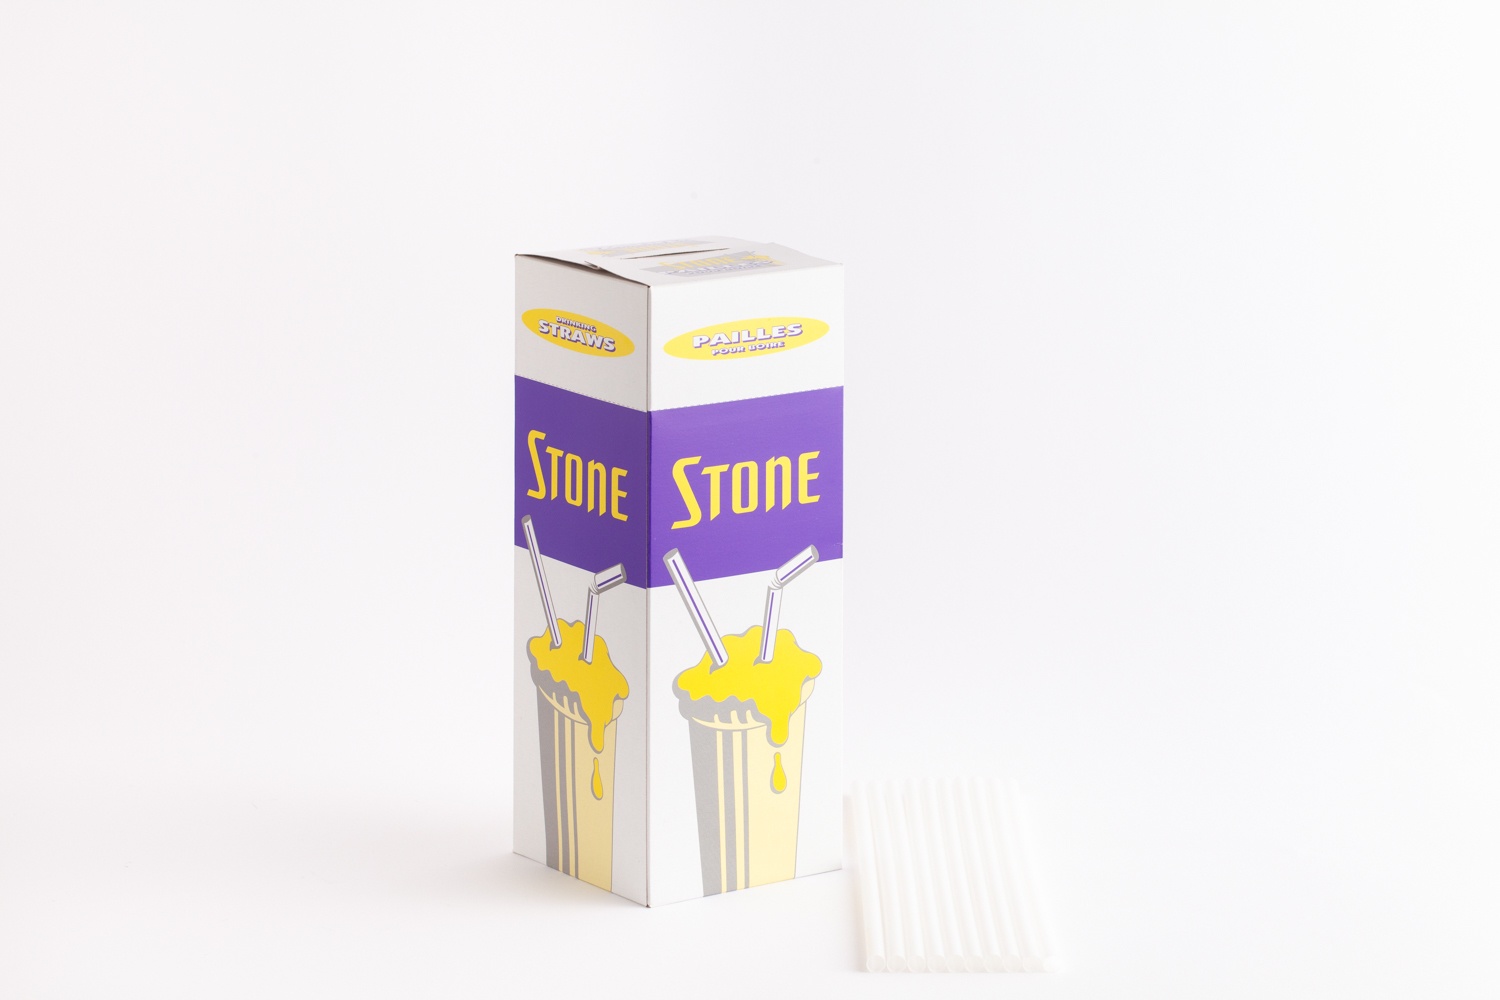 isolated product shot - stone straws box purple